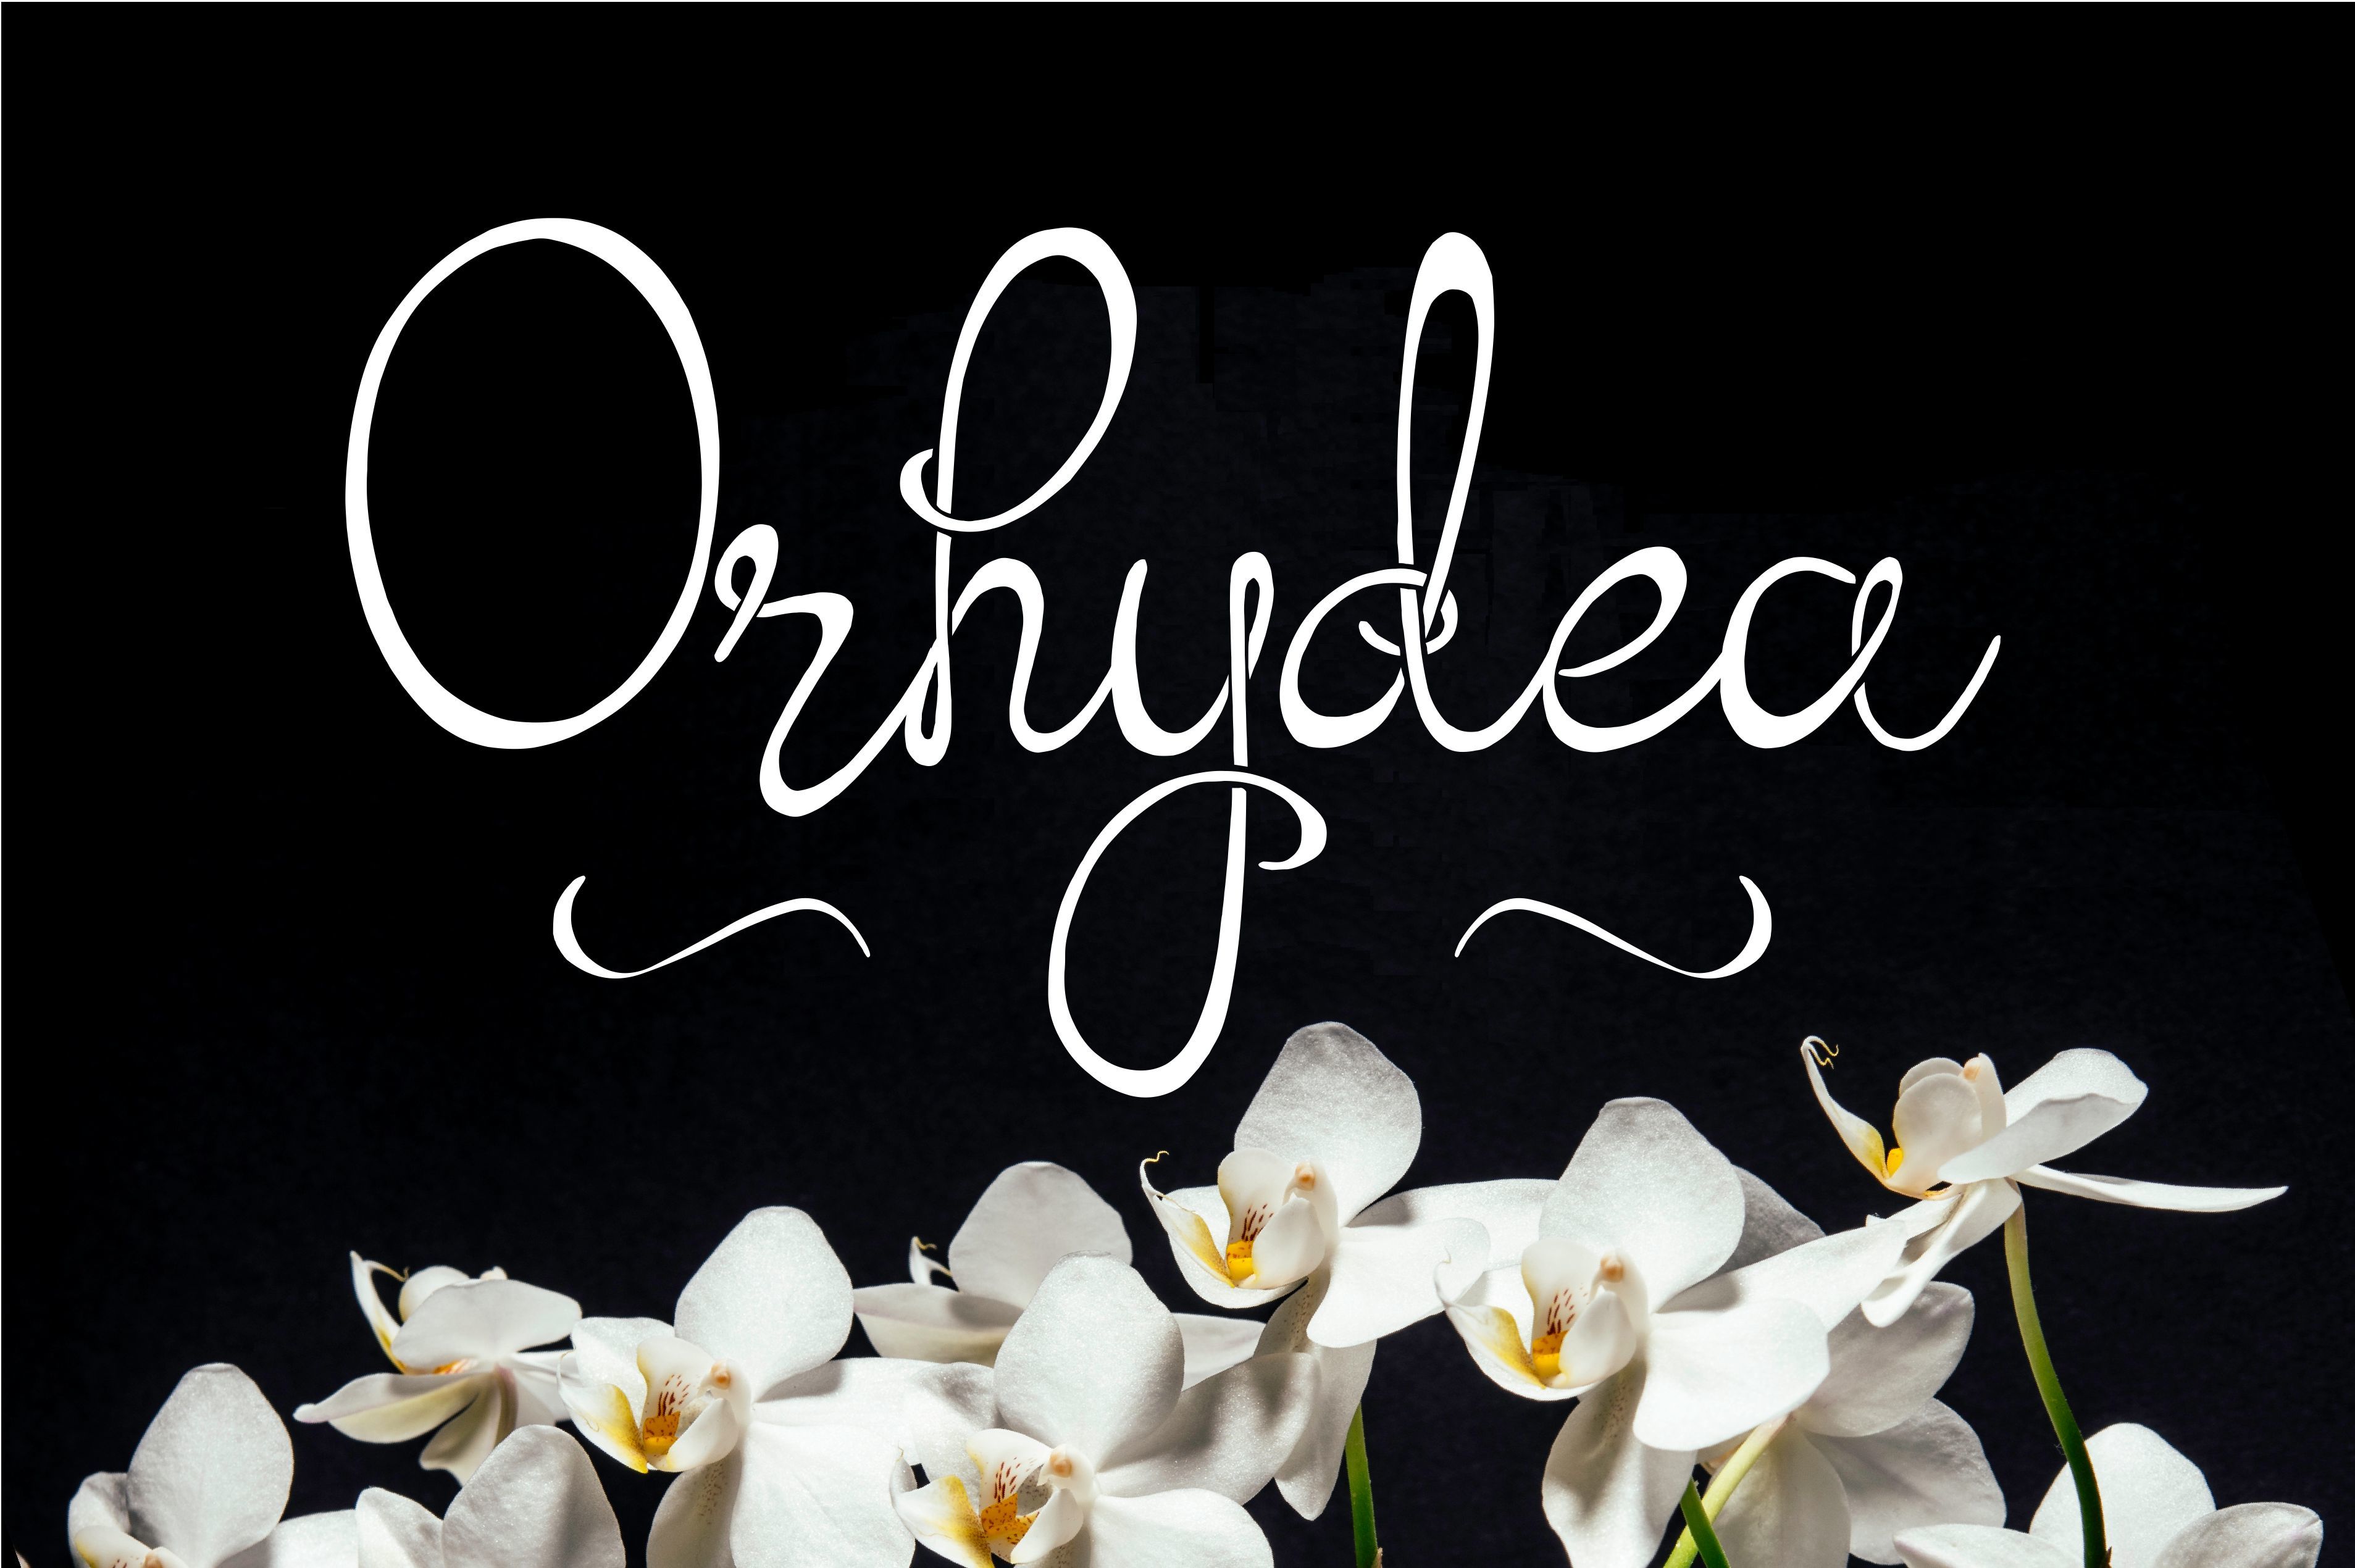 Orhydea